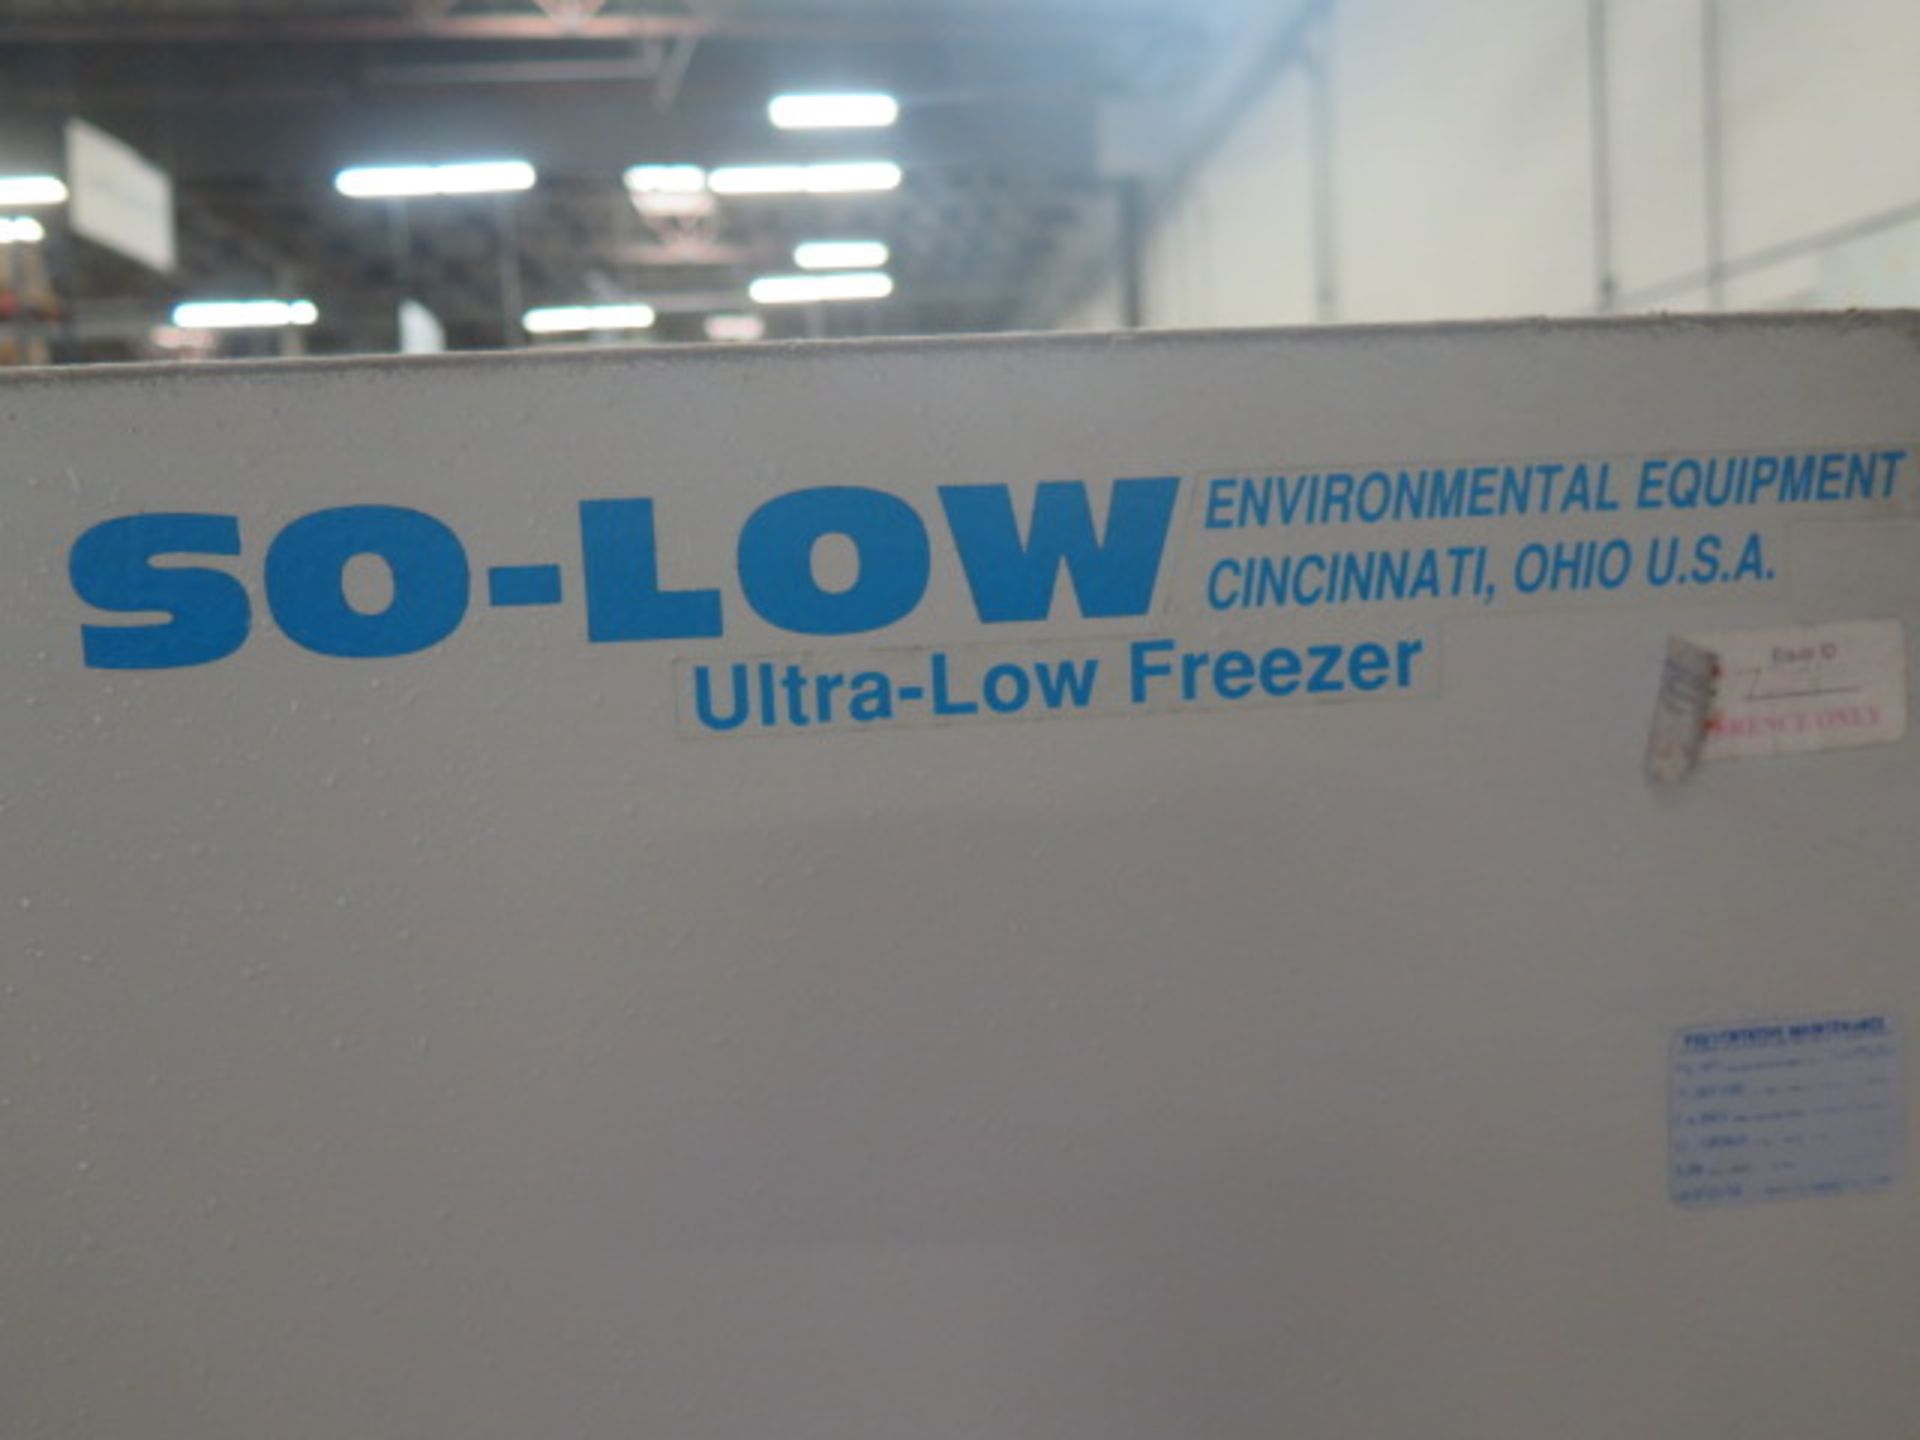 So-Low mdl. U40-22 Ultra-Low Freezer s/n 0001197 w/ Digital Temperature Control - Image 5 of 6